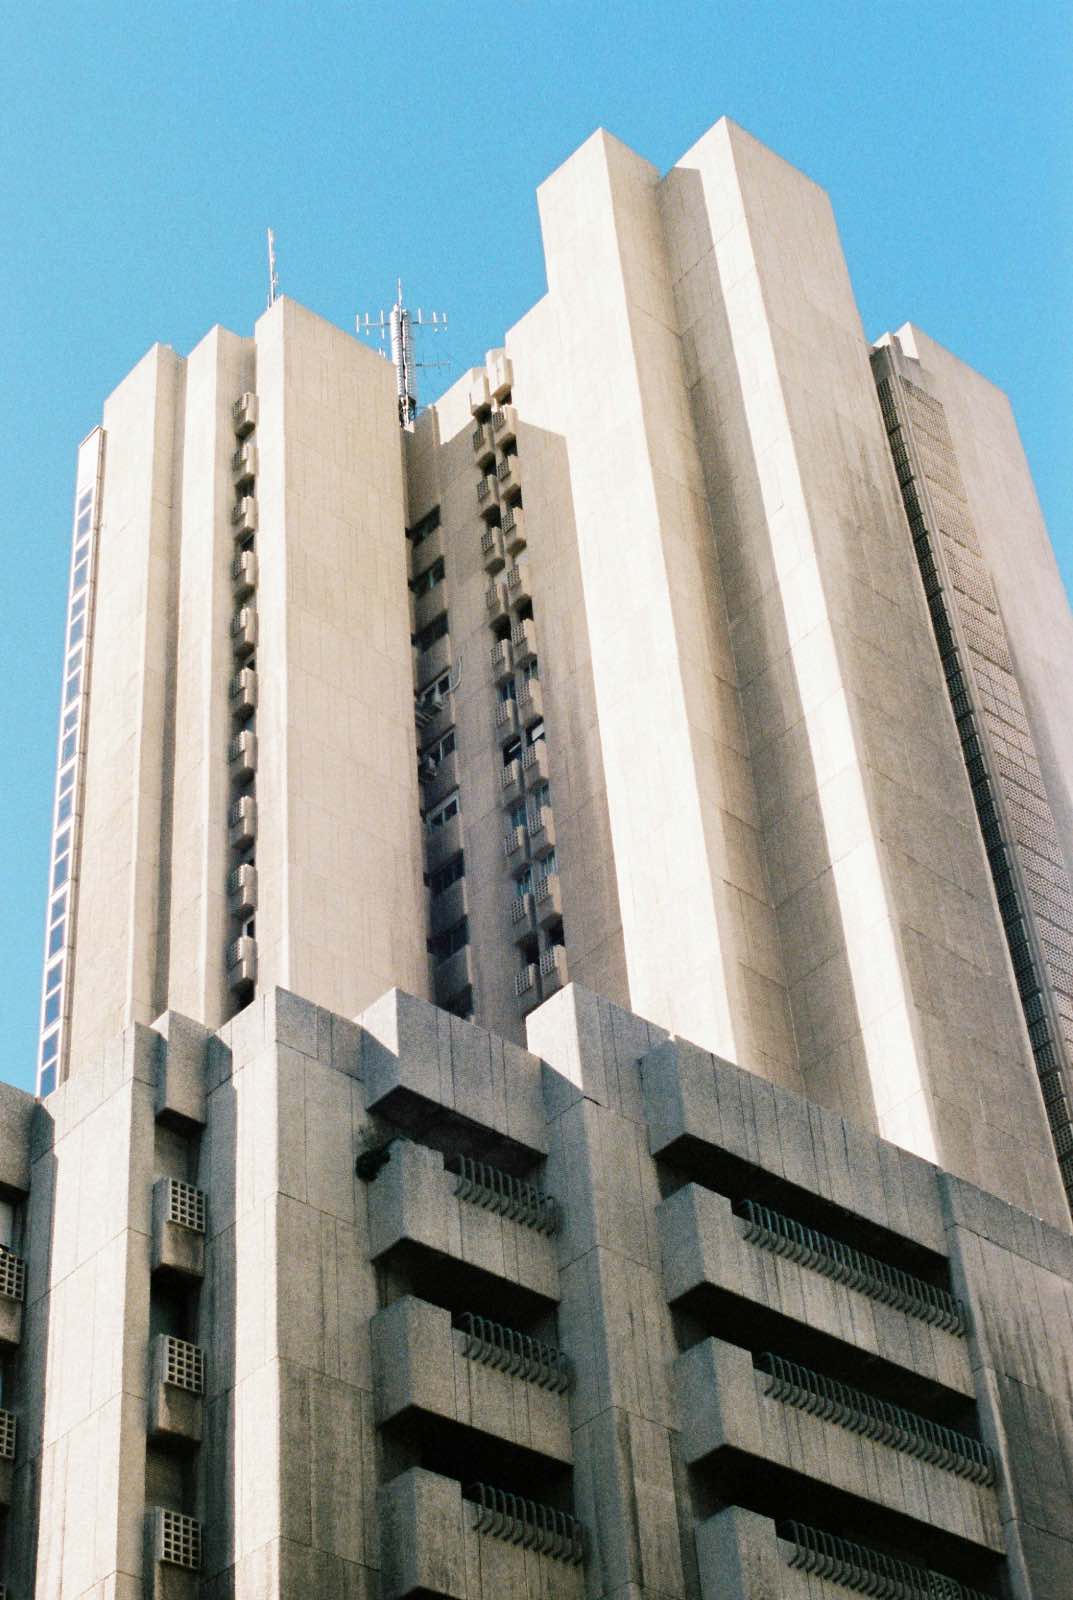 arquitectura brutalista en Madrid, torre de valencia